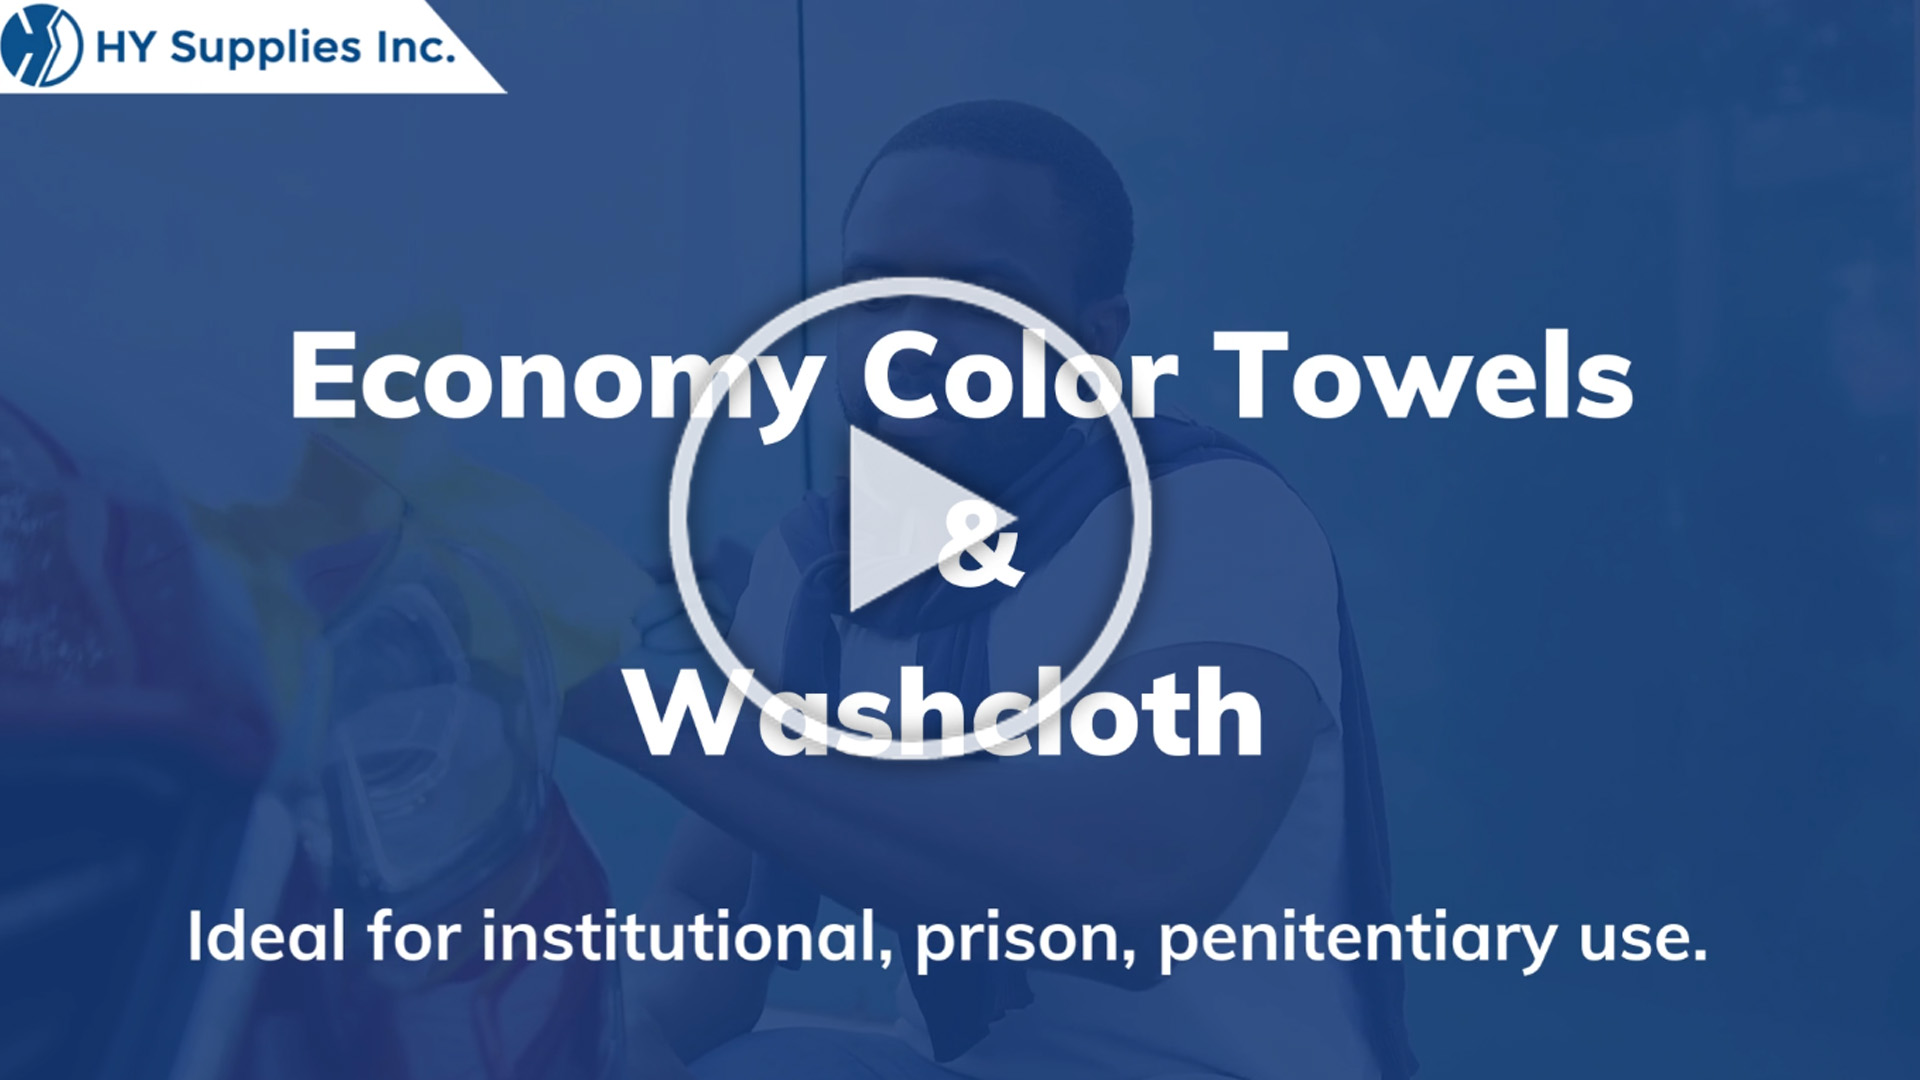 Economy Color Towels & Washcloth